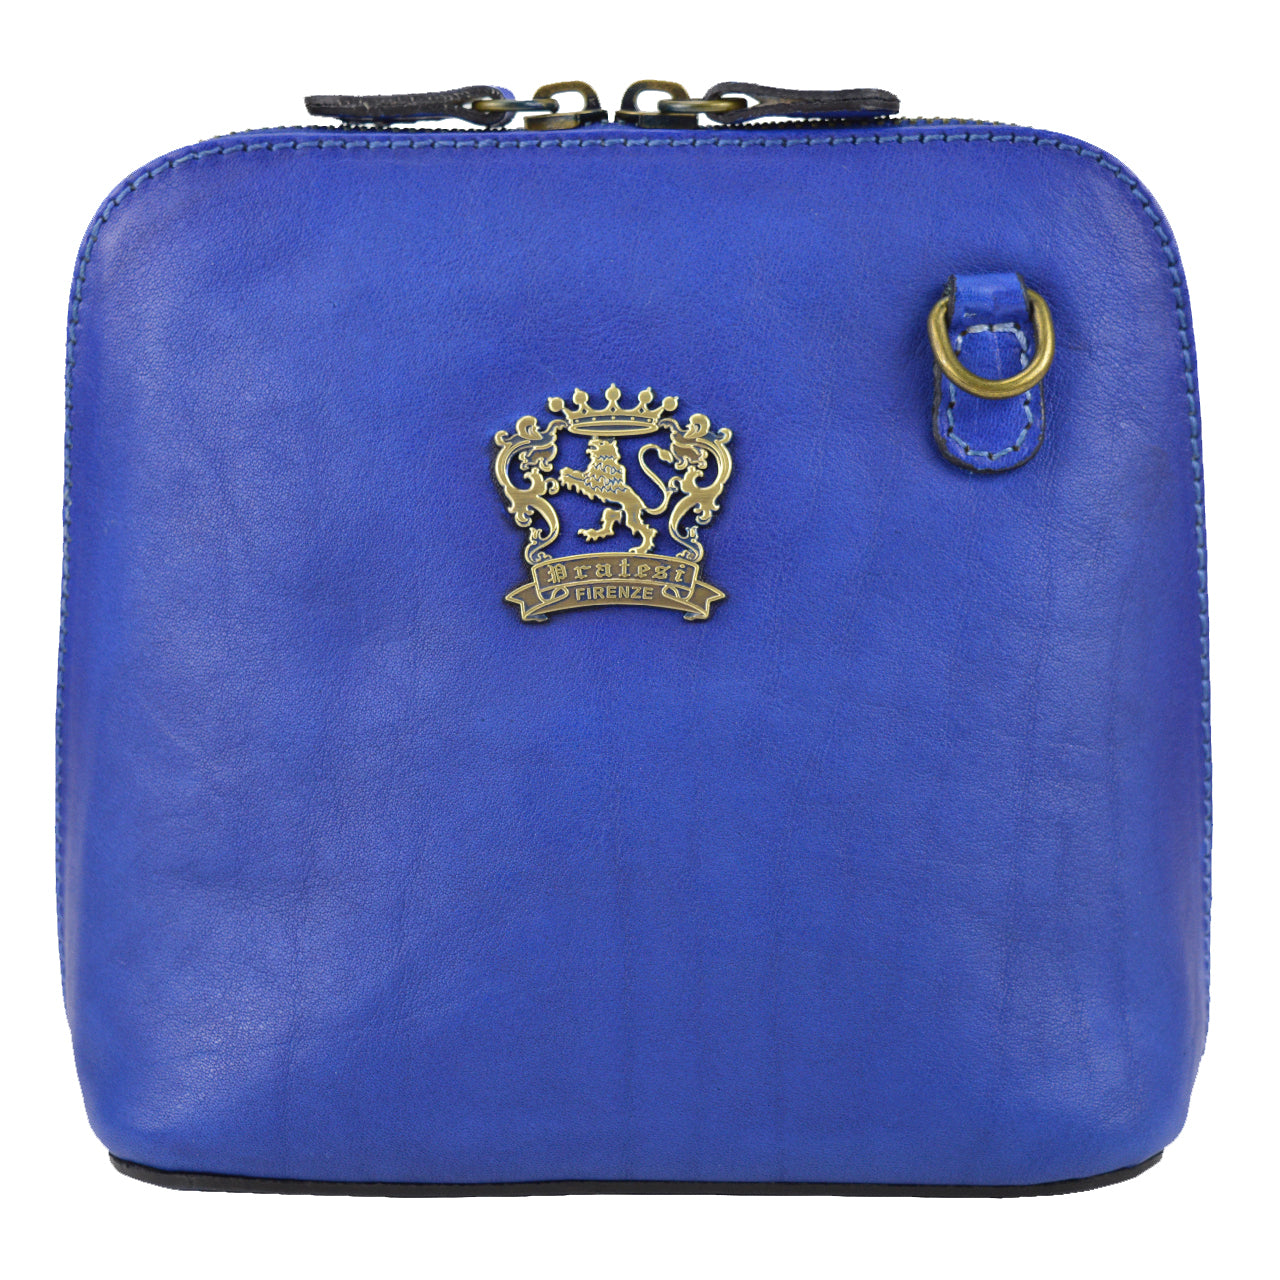 Pratesi Bag Volterra Bruce in genuine Italian leather - Vegetable Tanned Italian Leather Electric Blue